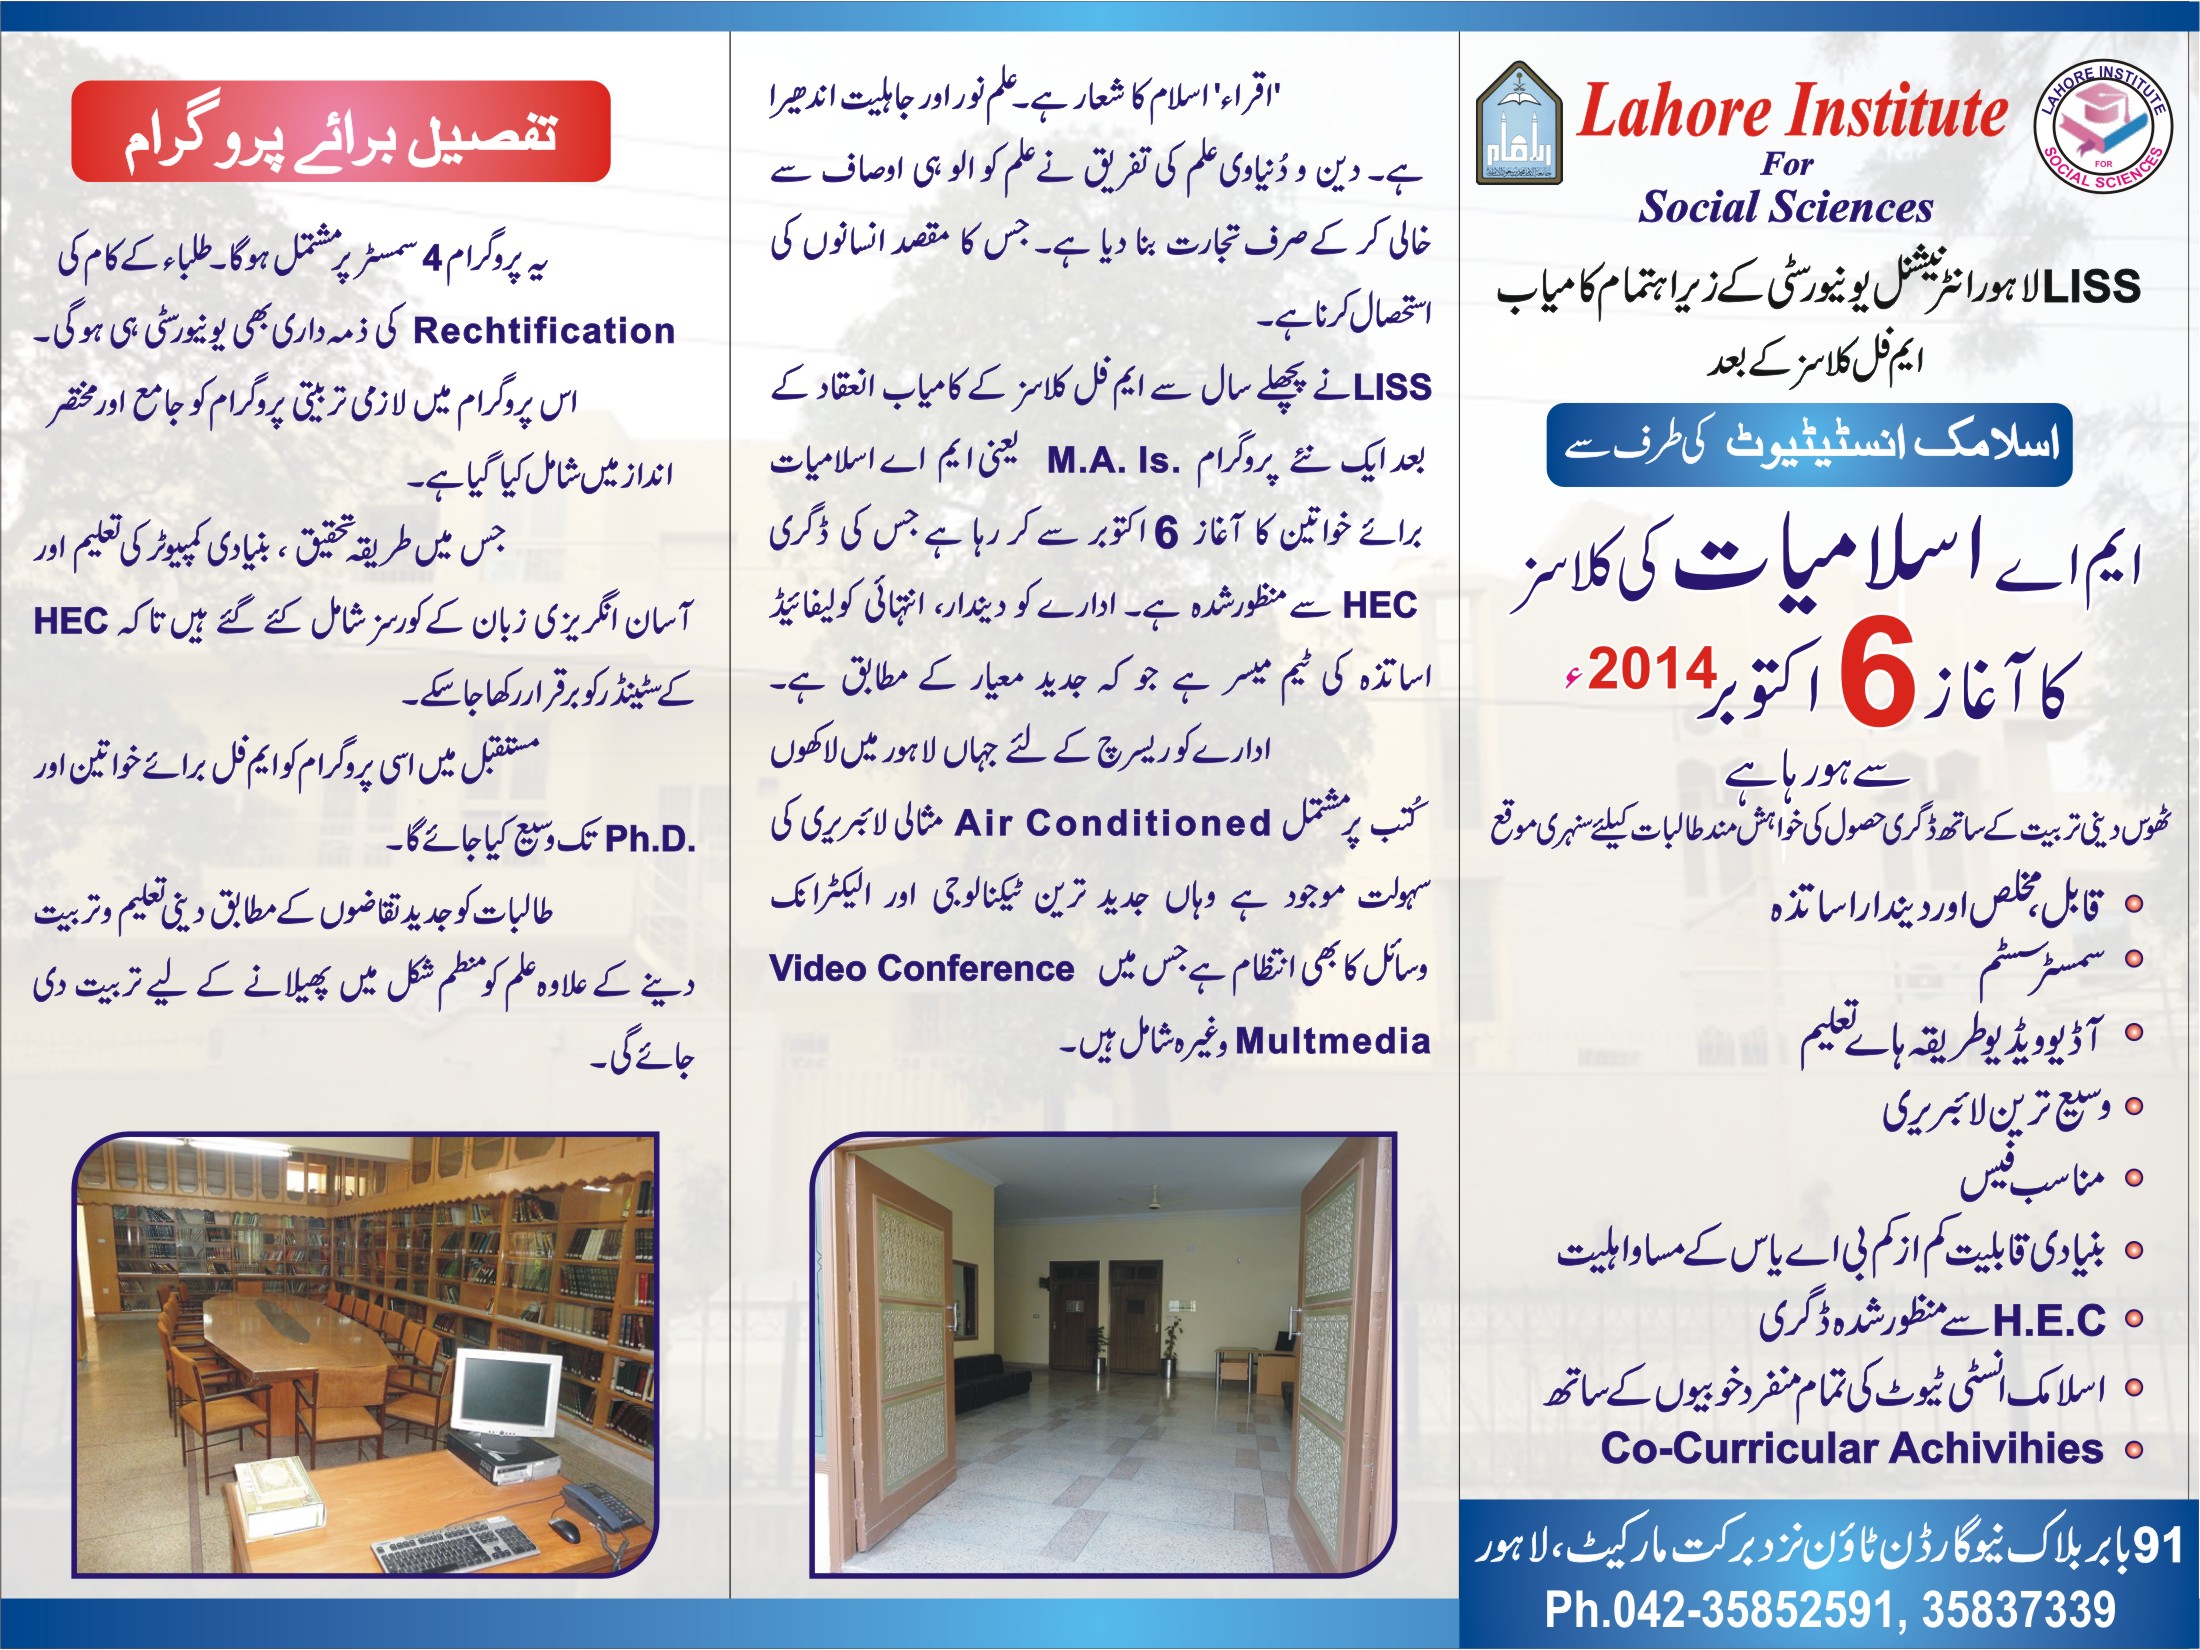 Lahore Institute try fold brochure.JPG